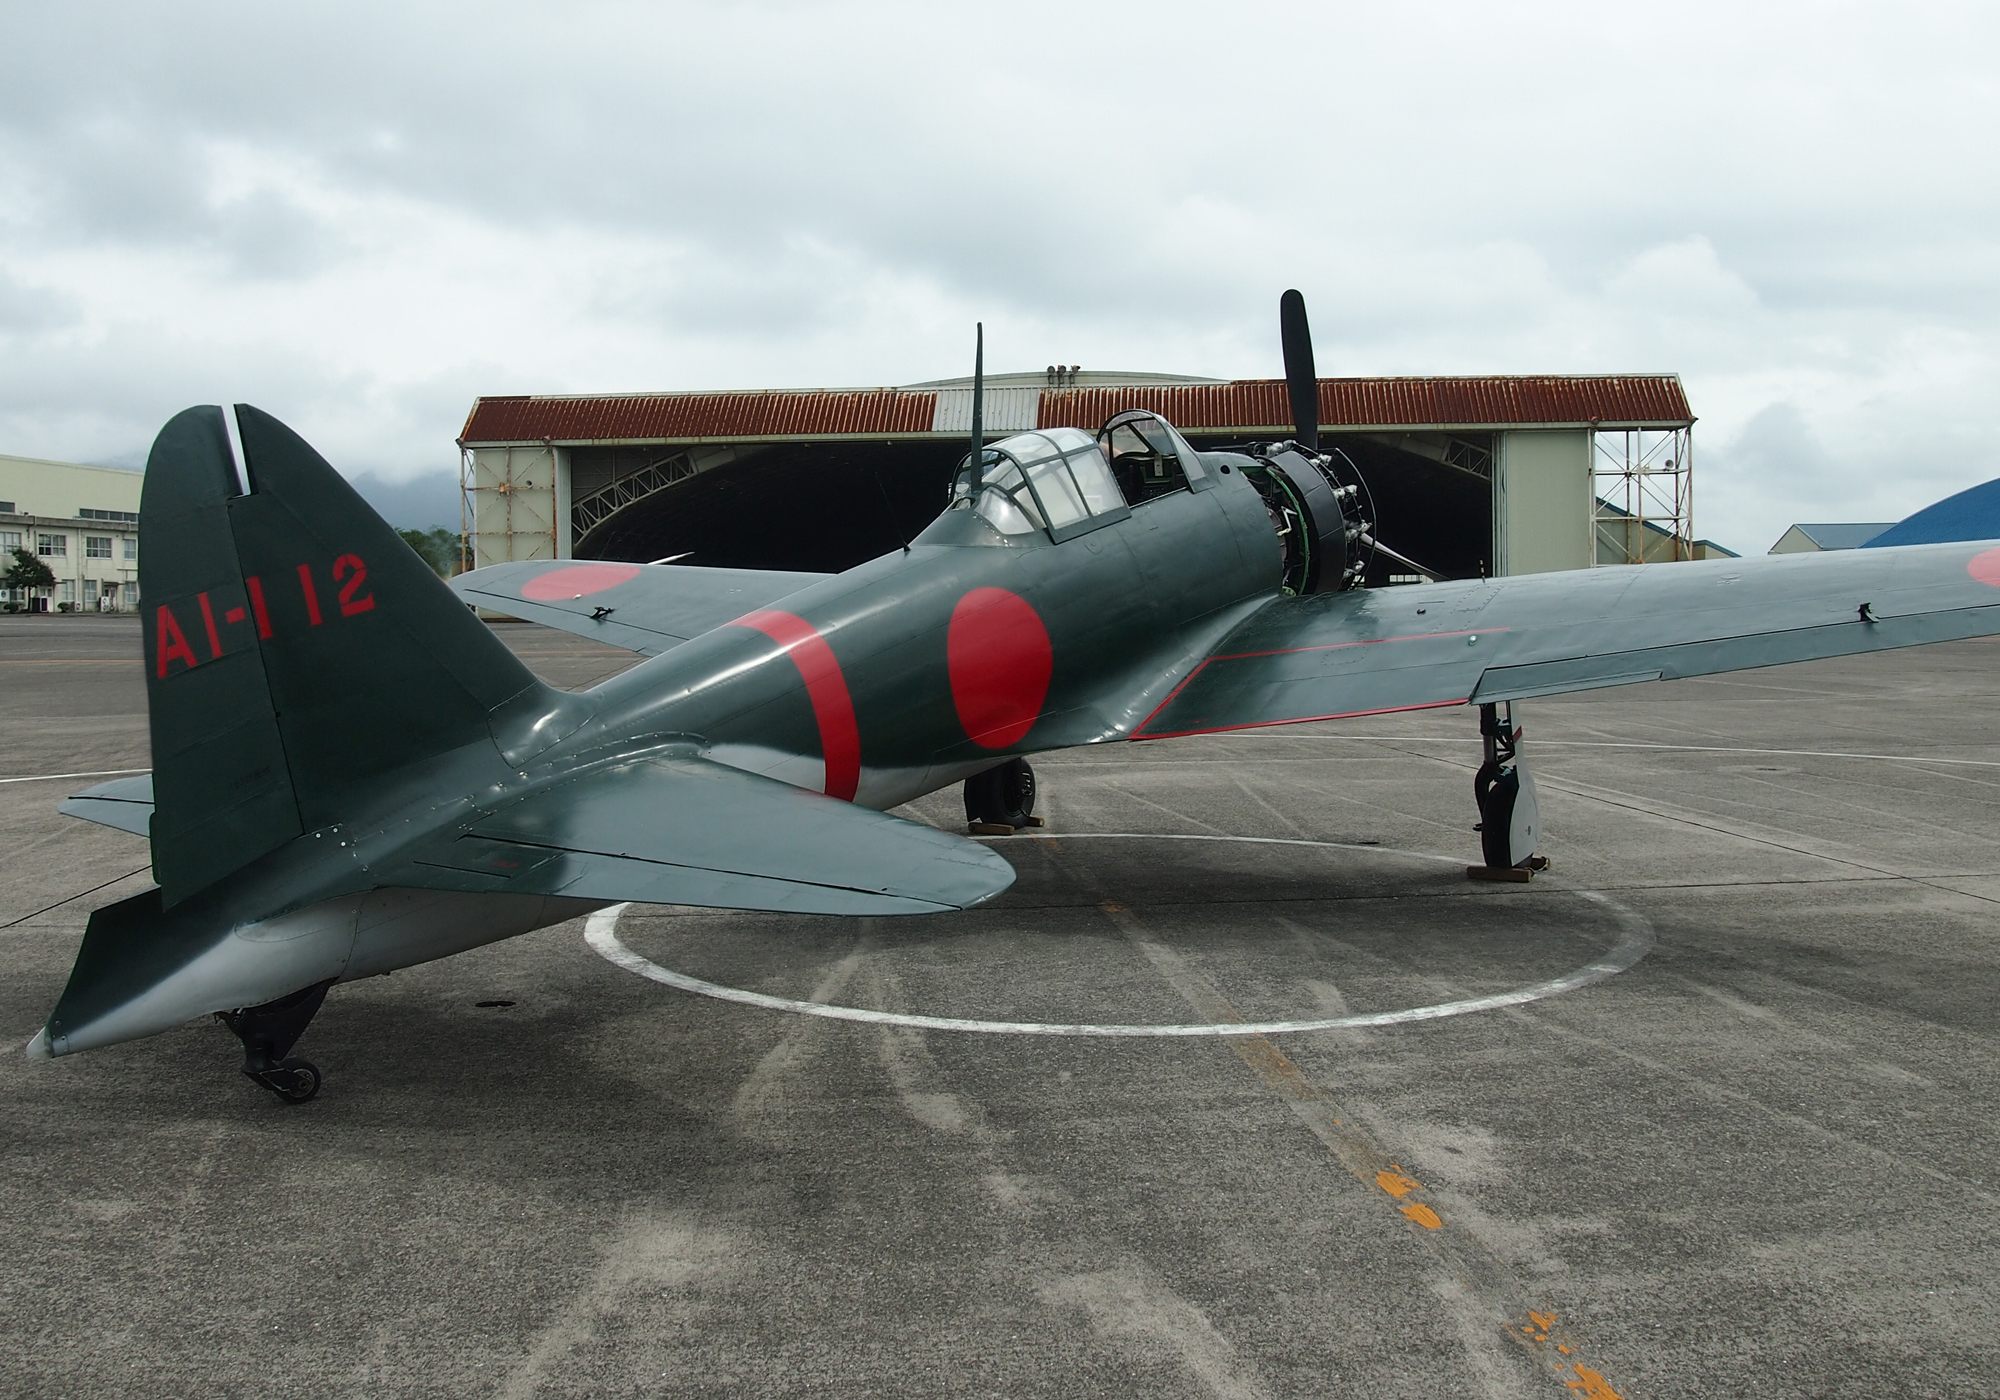 MITSUBISHI A6M2 ZERO WWII FIGHTER - AIRFIX 1/72 scale